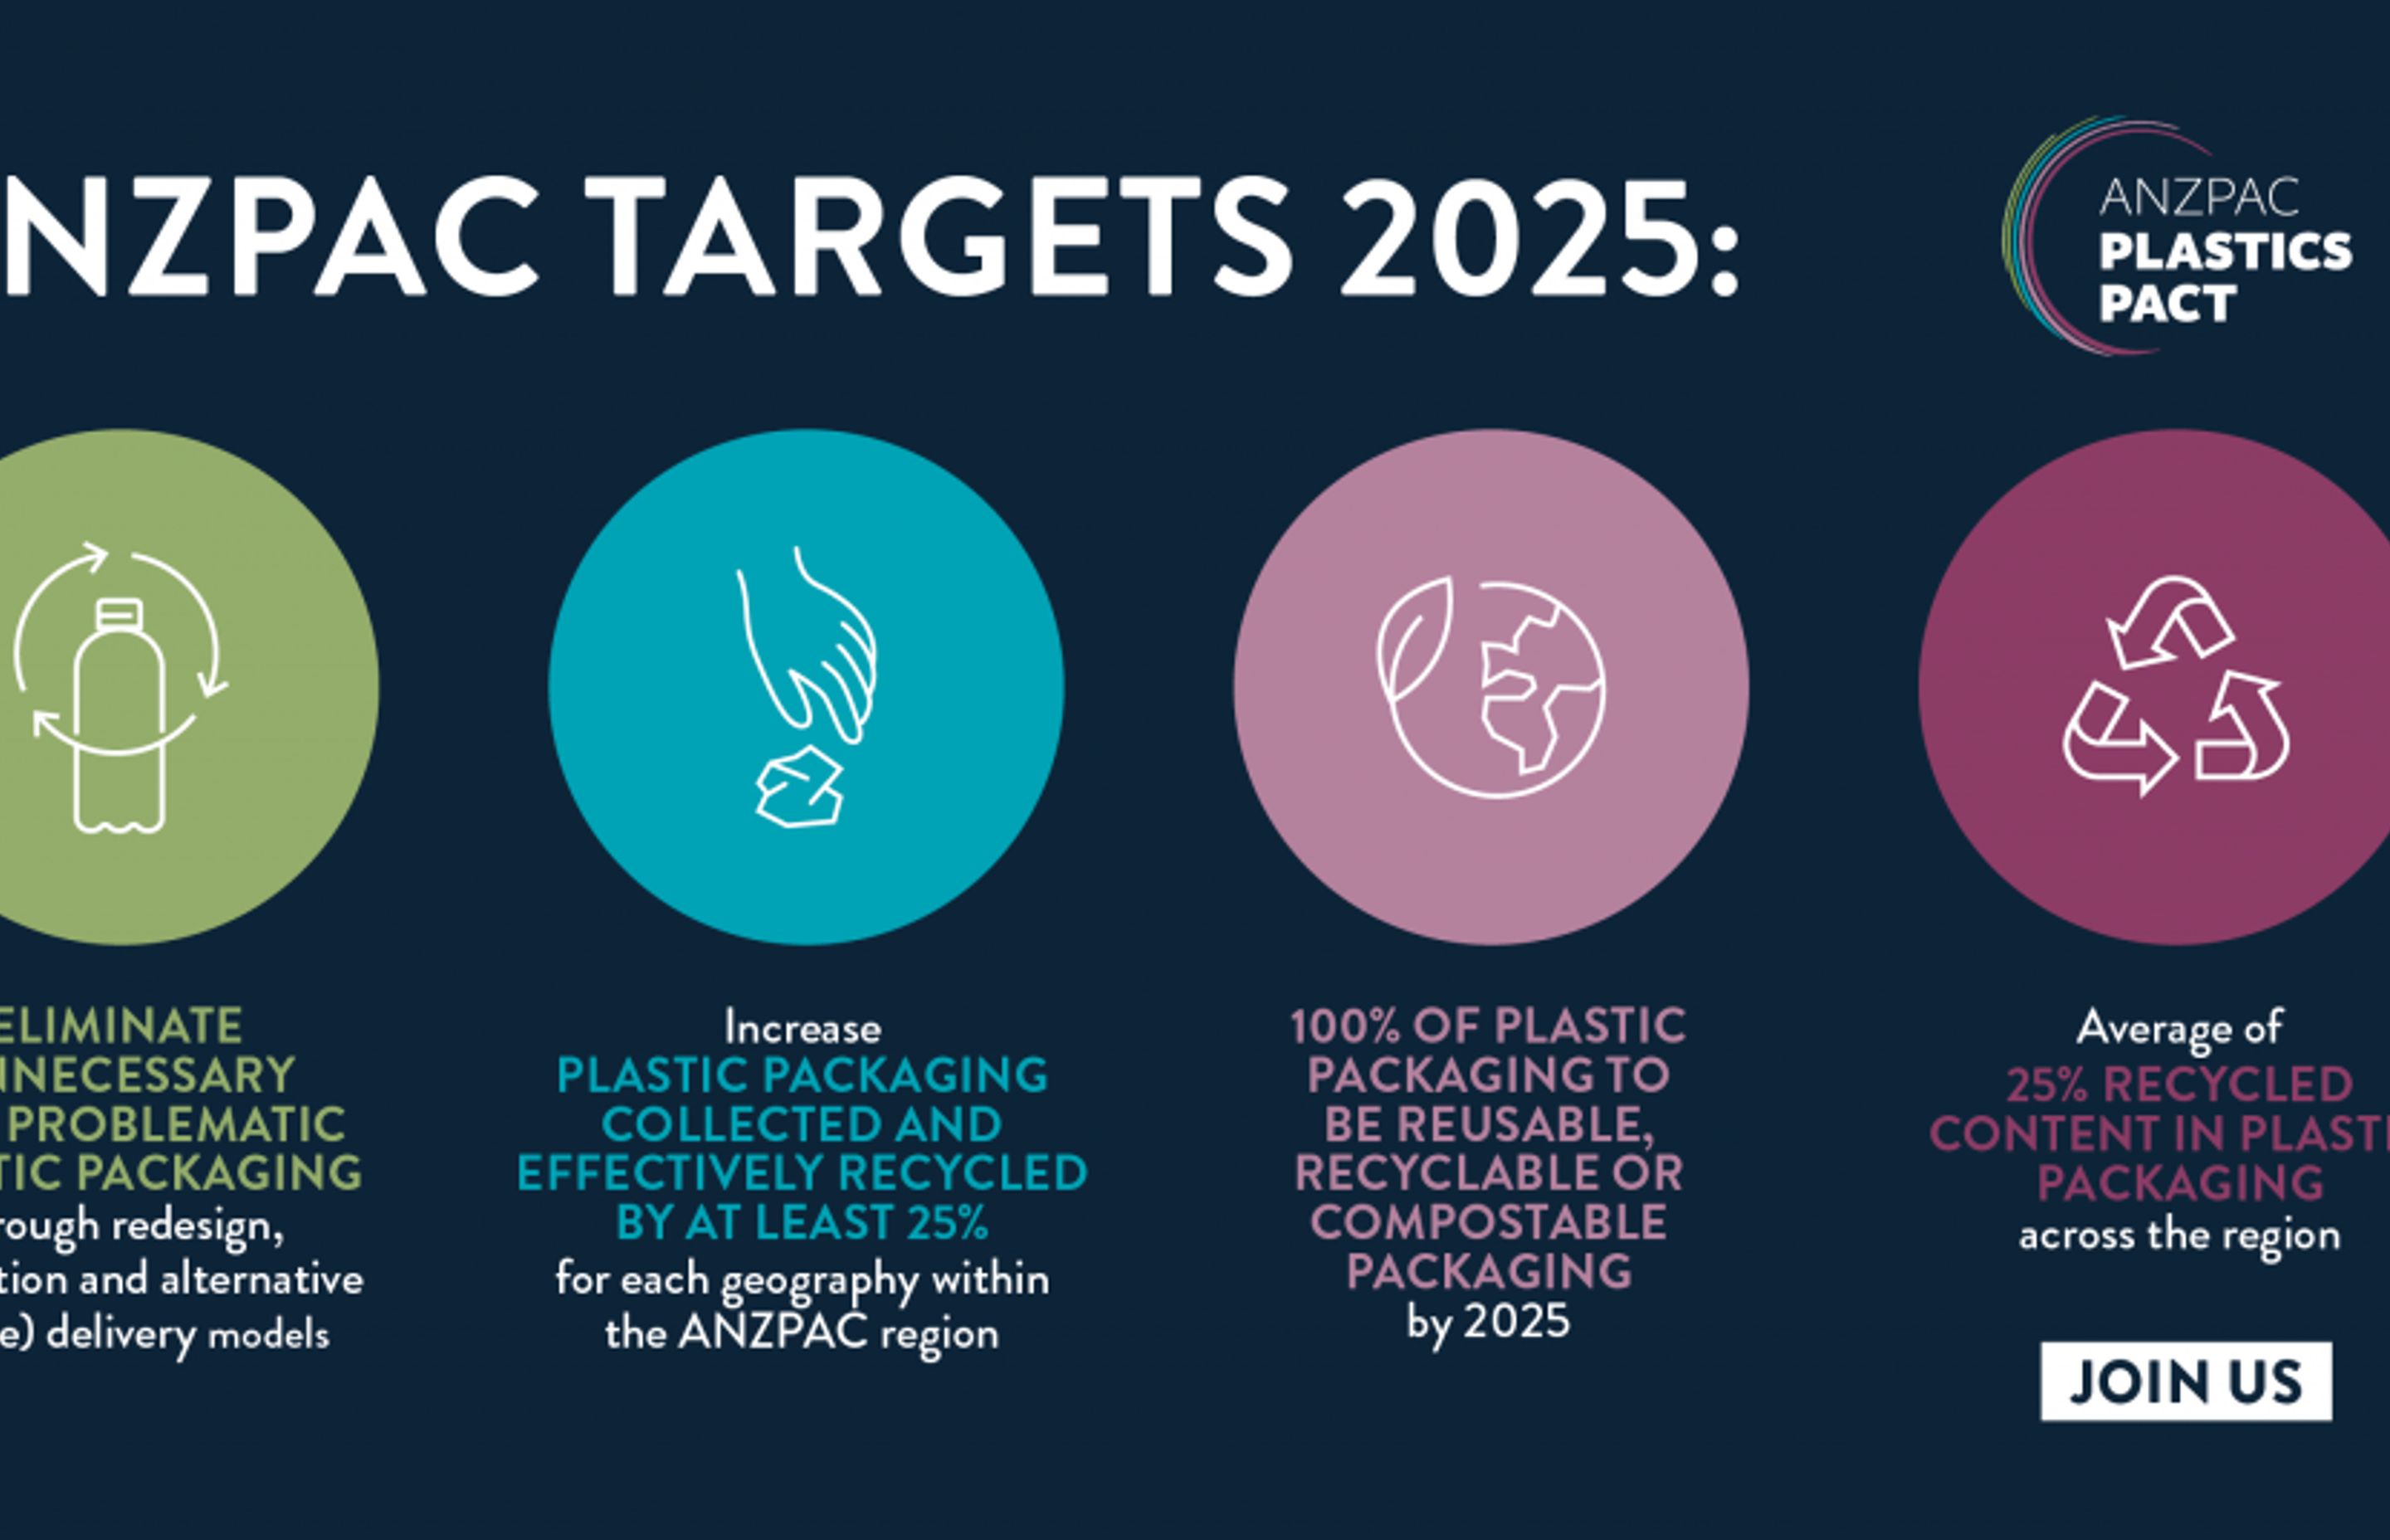 GECA Joins the ANZPAC Plastics Pact